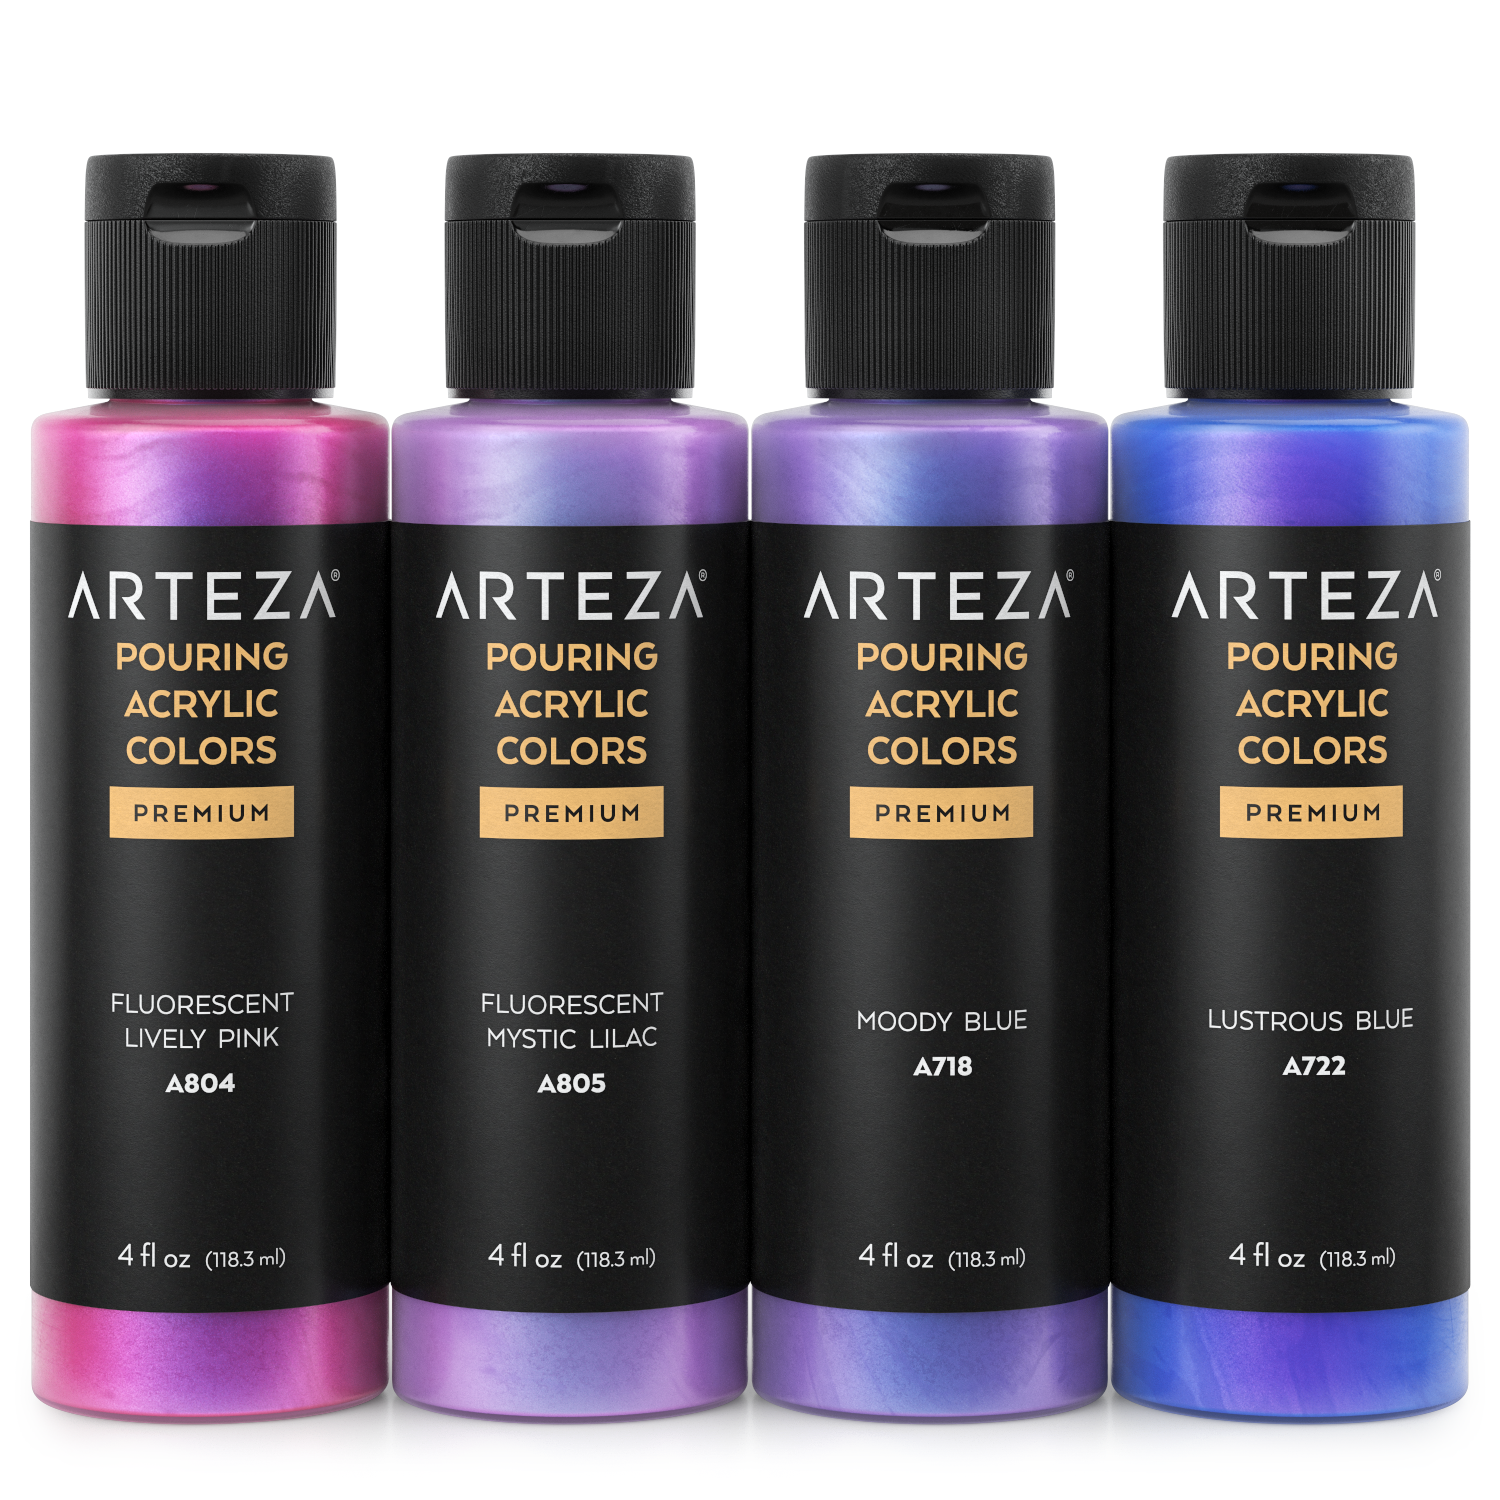 Arteza Acrylic Paint, Iridescent Harmony Tones, 2oz Bottles- Set of 20